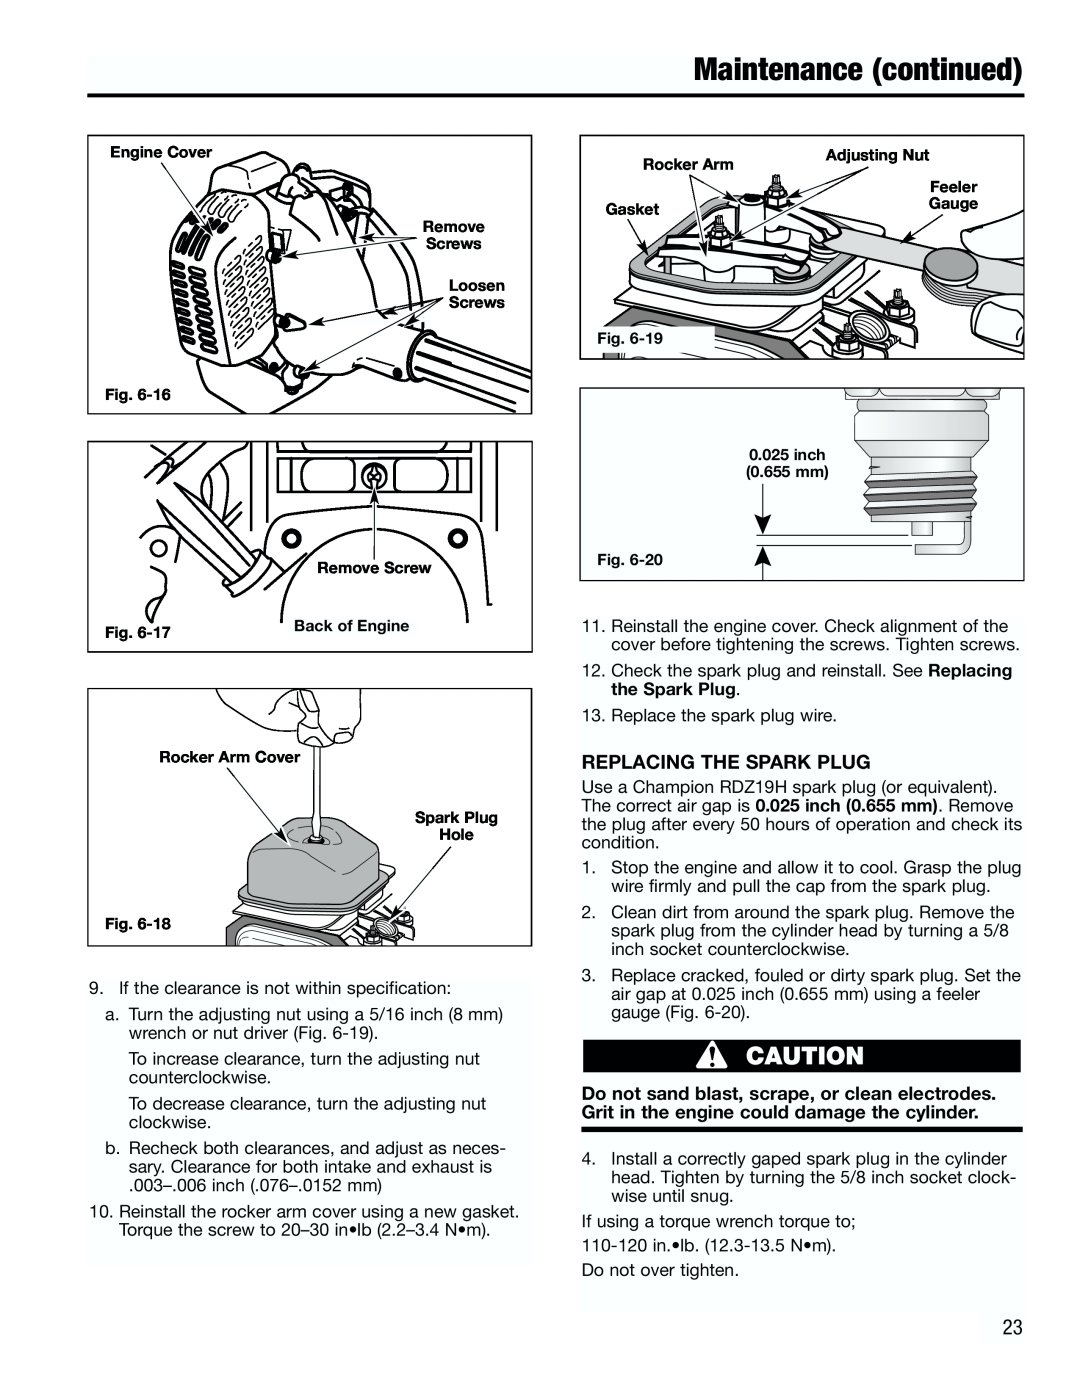 Troy-Bilt TB4000 manual Replacing The Spark Plug, Maintenance continued 